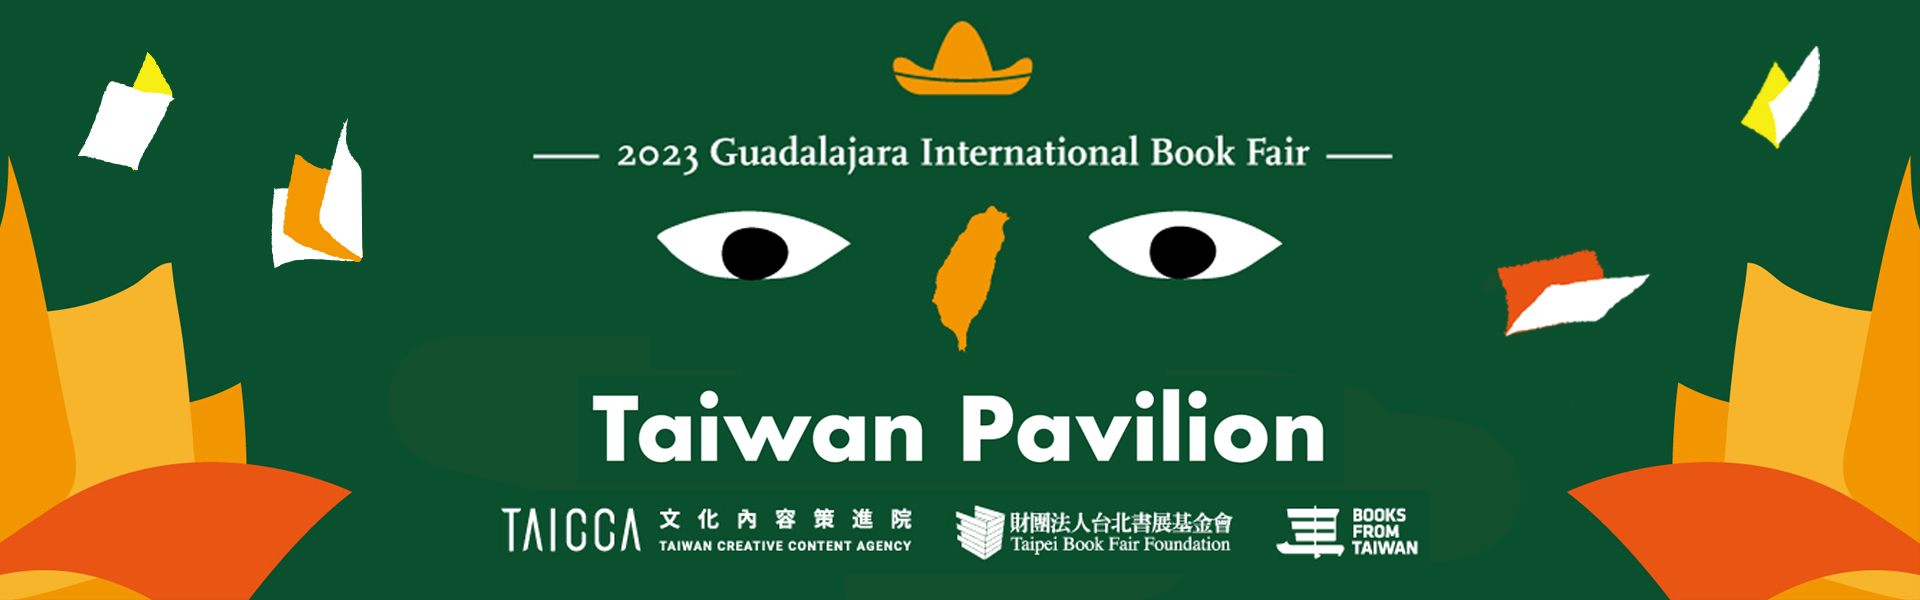 2023 Guadalajara International Book Fair 